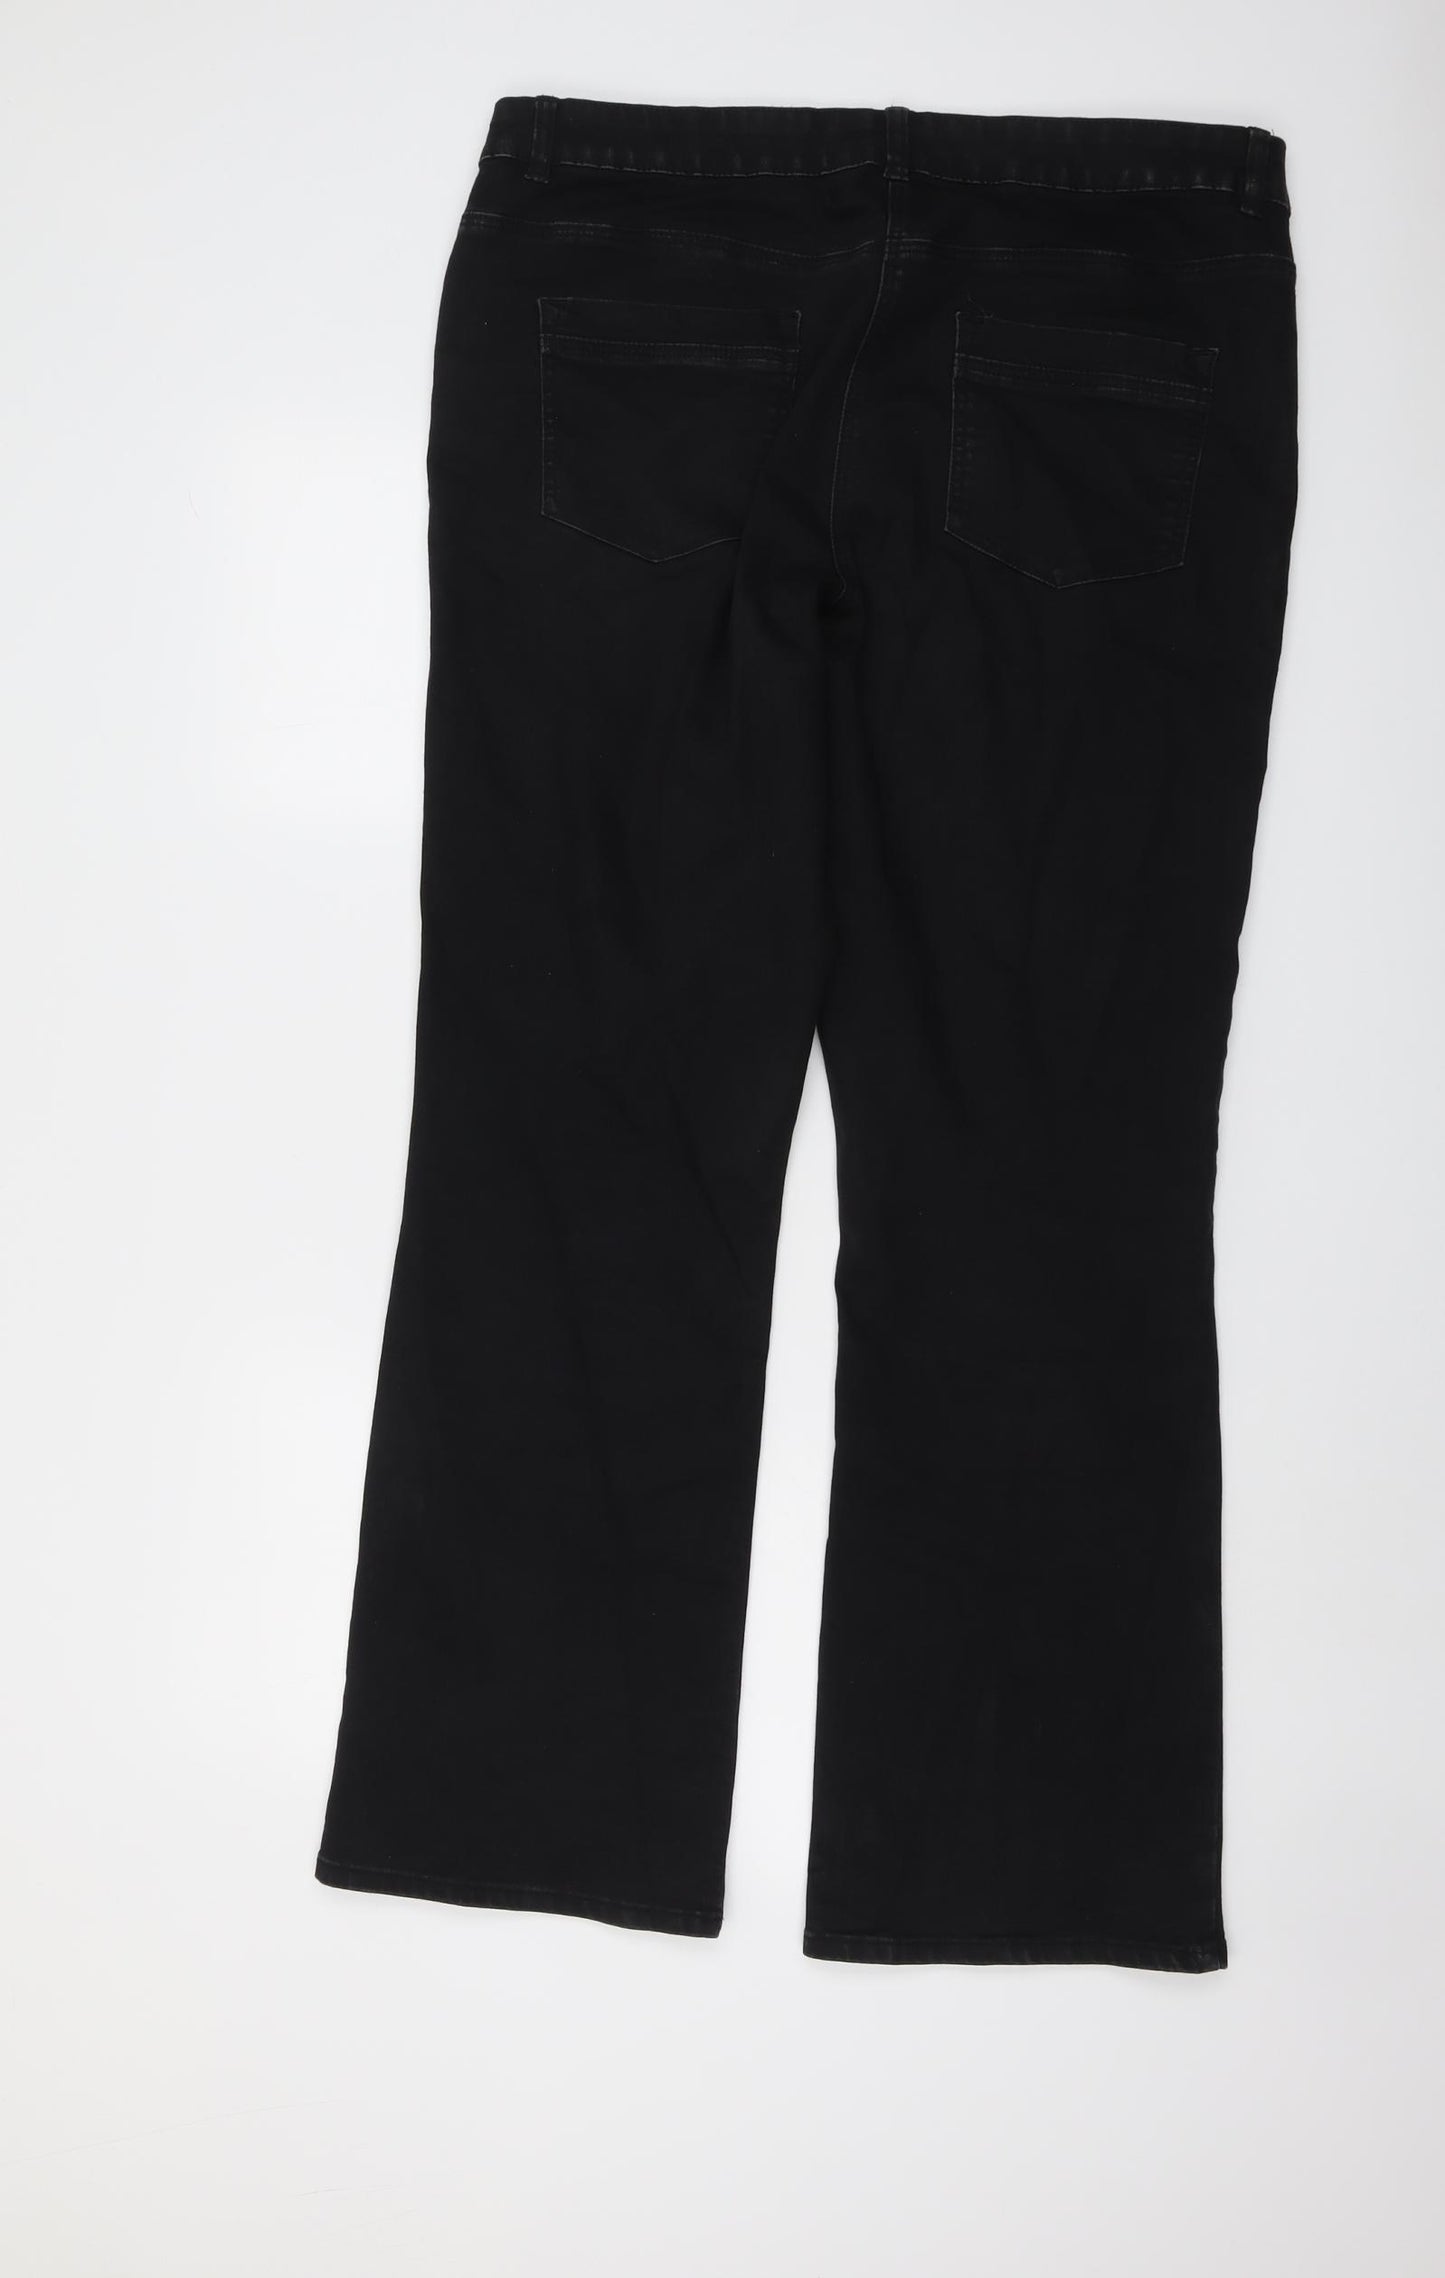 Bonmarché Womens Black Cotton Bootcut Jeans Size 18 L31 in Regular Button